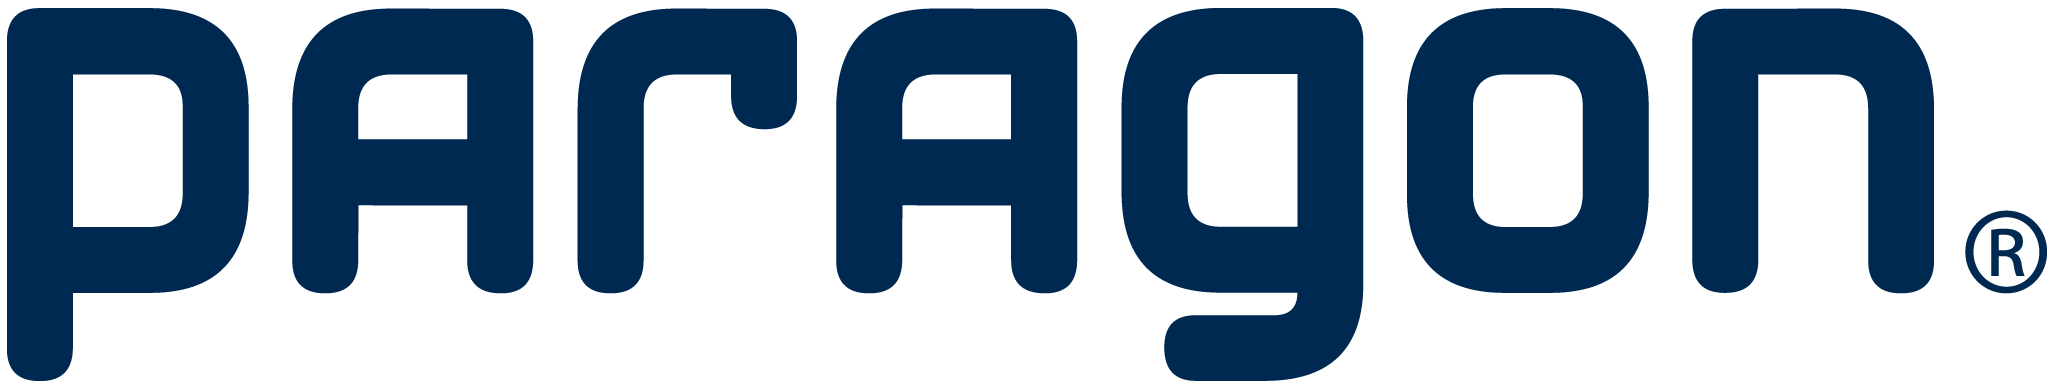 07-2018_paragon_neues-Logo